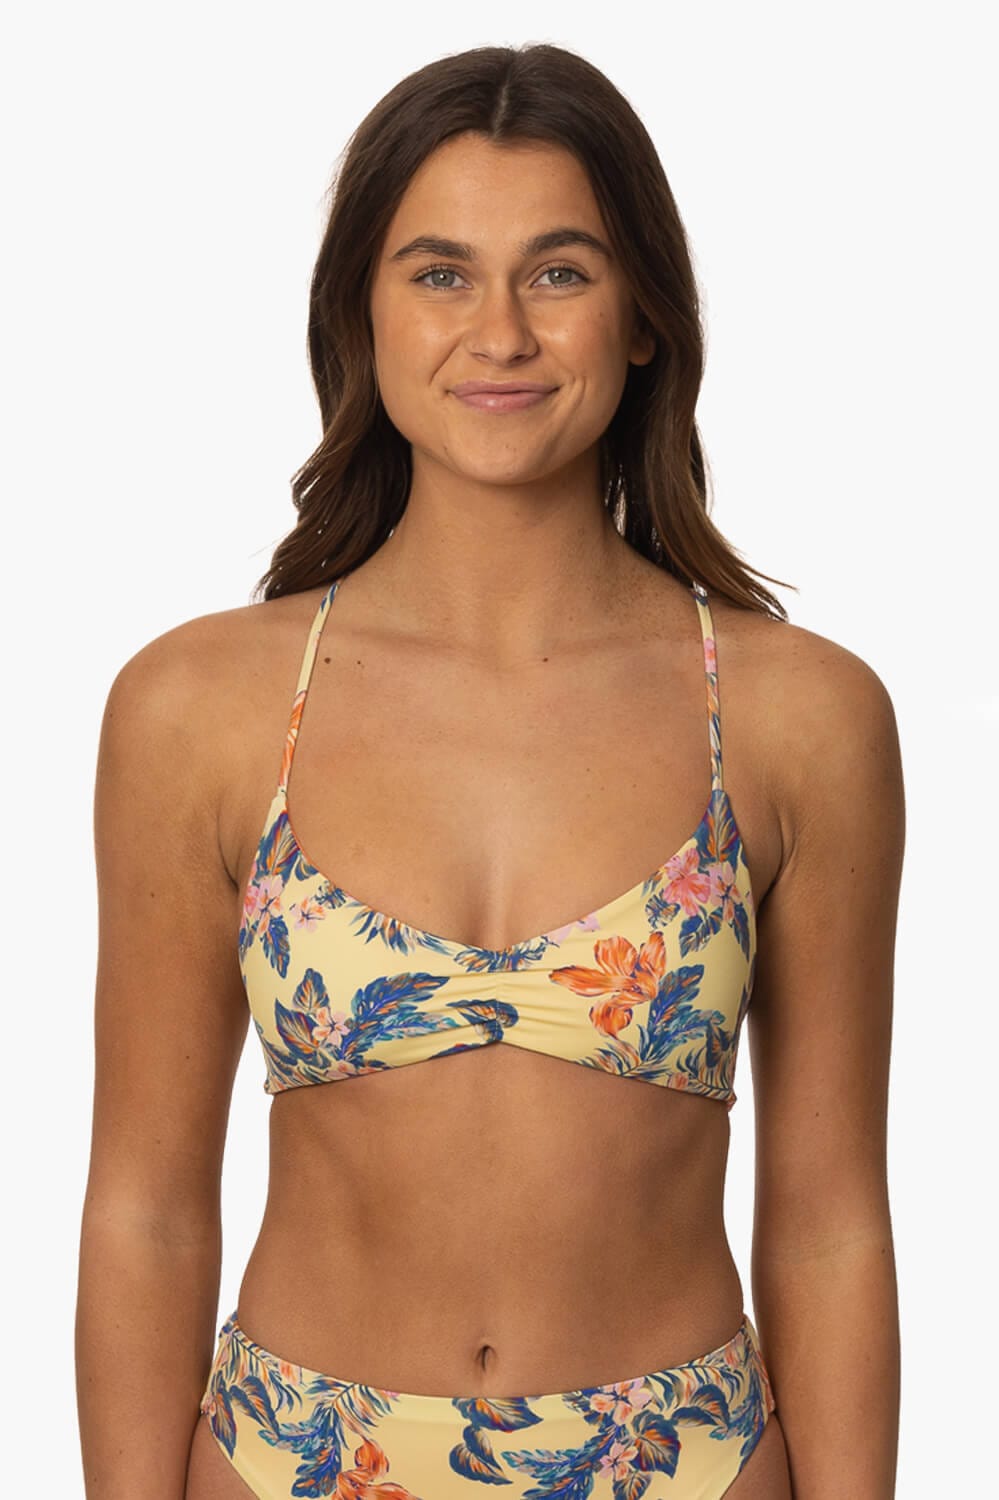 Eliana Surfing Bikini Top, Tie-Back Bikini for Surfers